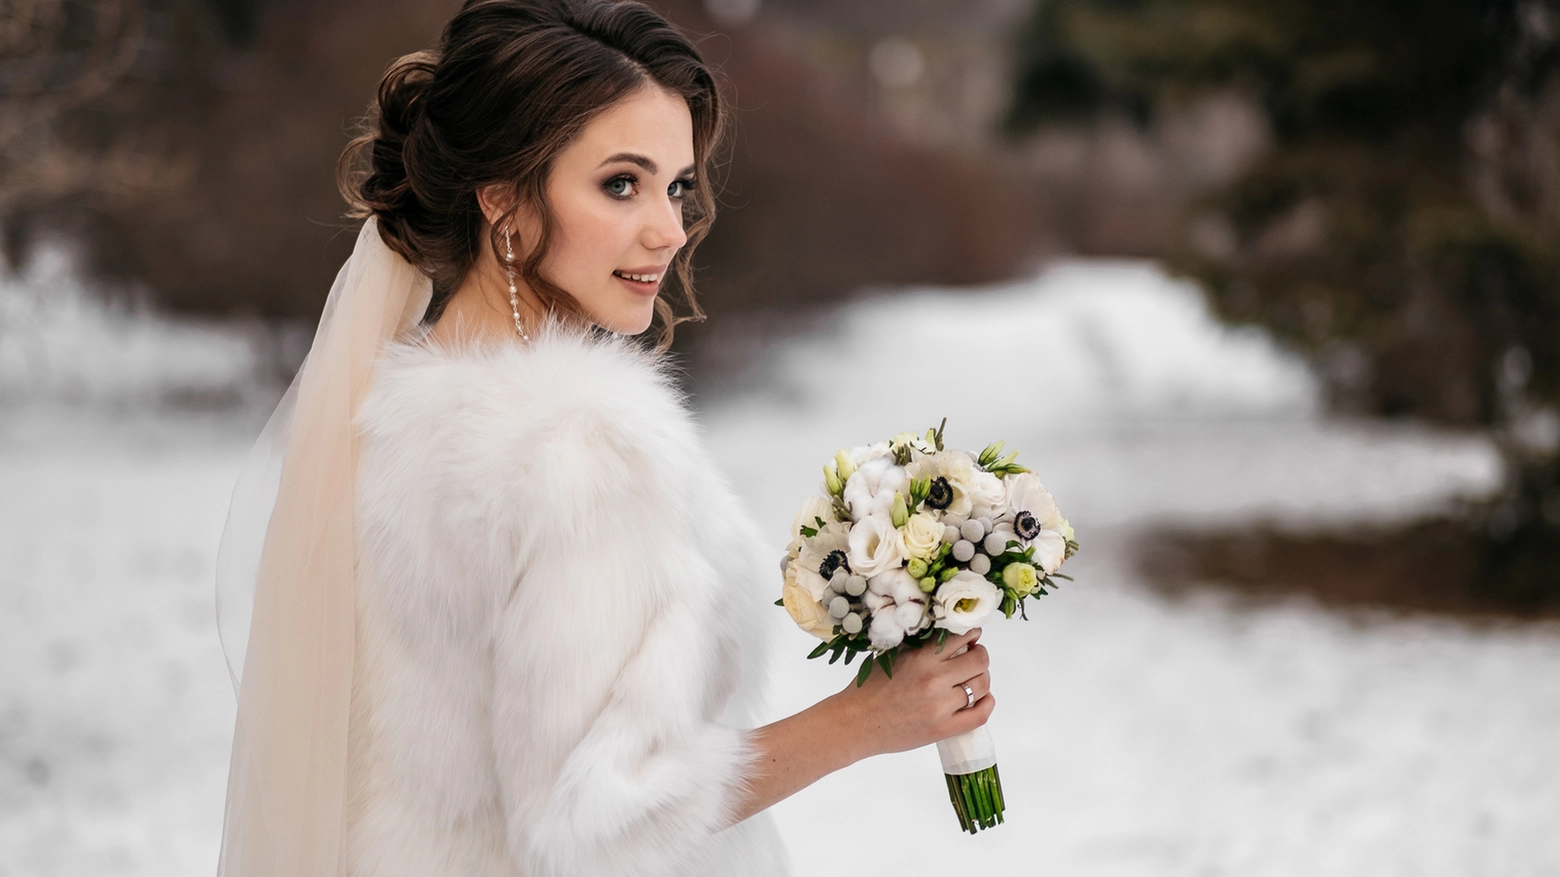 Matrimonio inverno - Crediti iStock Photo